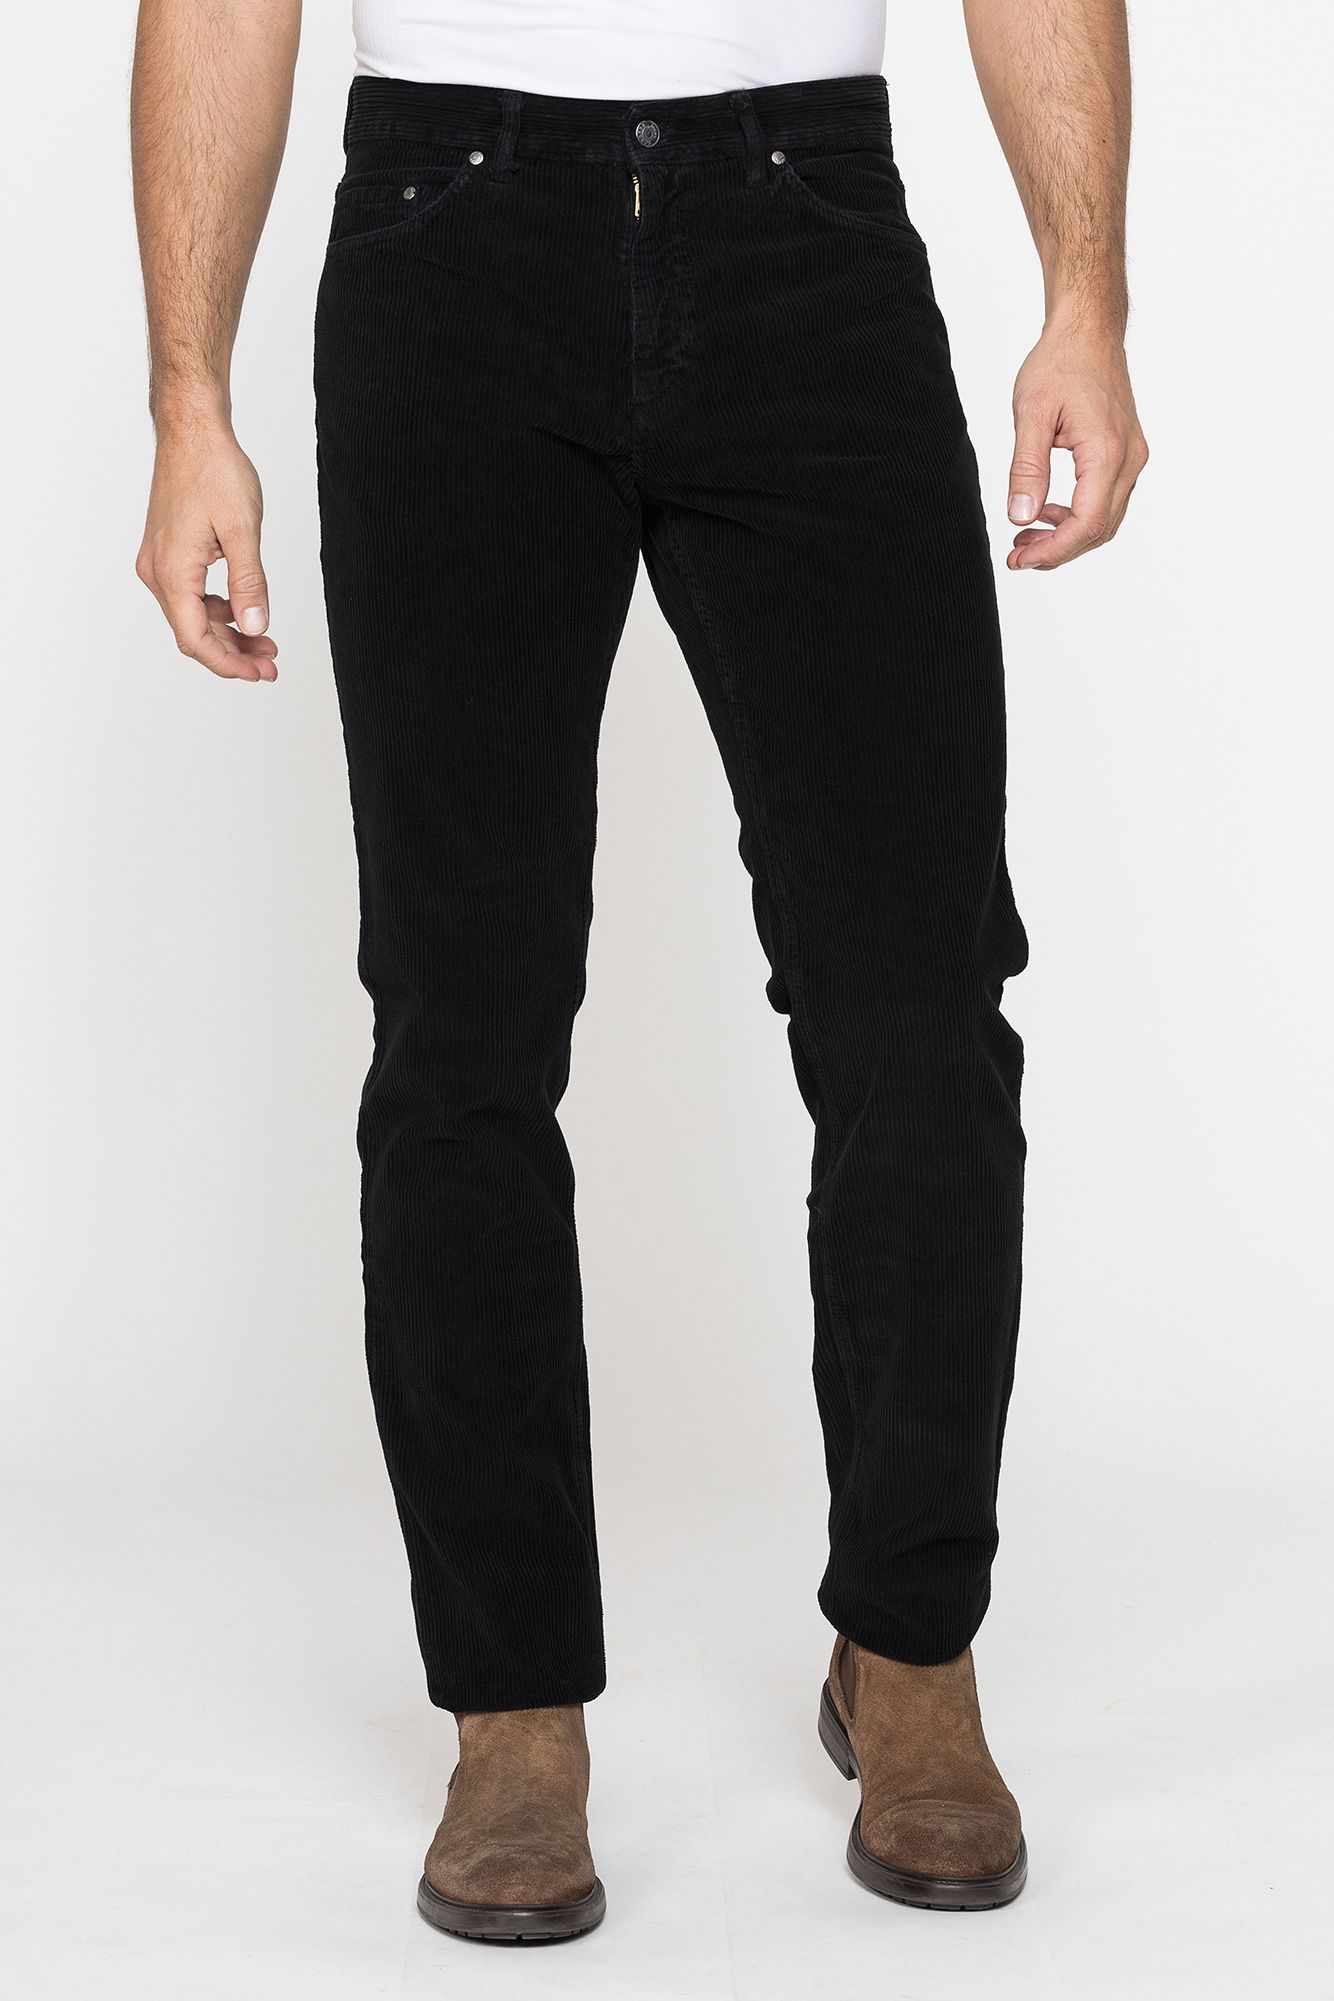 Jeans uomo pantaloni vita regolare 4 stagioni regular fit denim TOOCOOL LE-2489